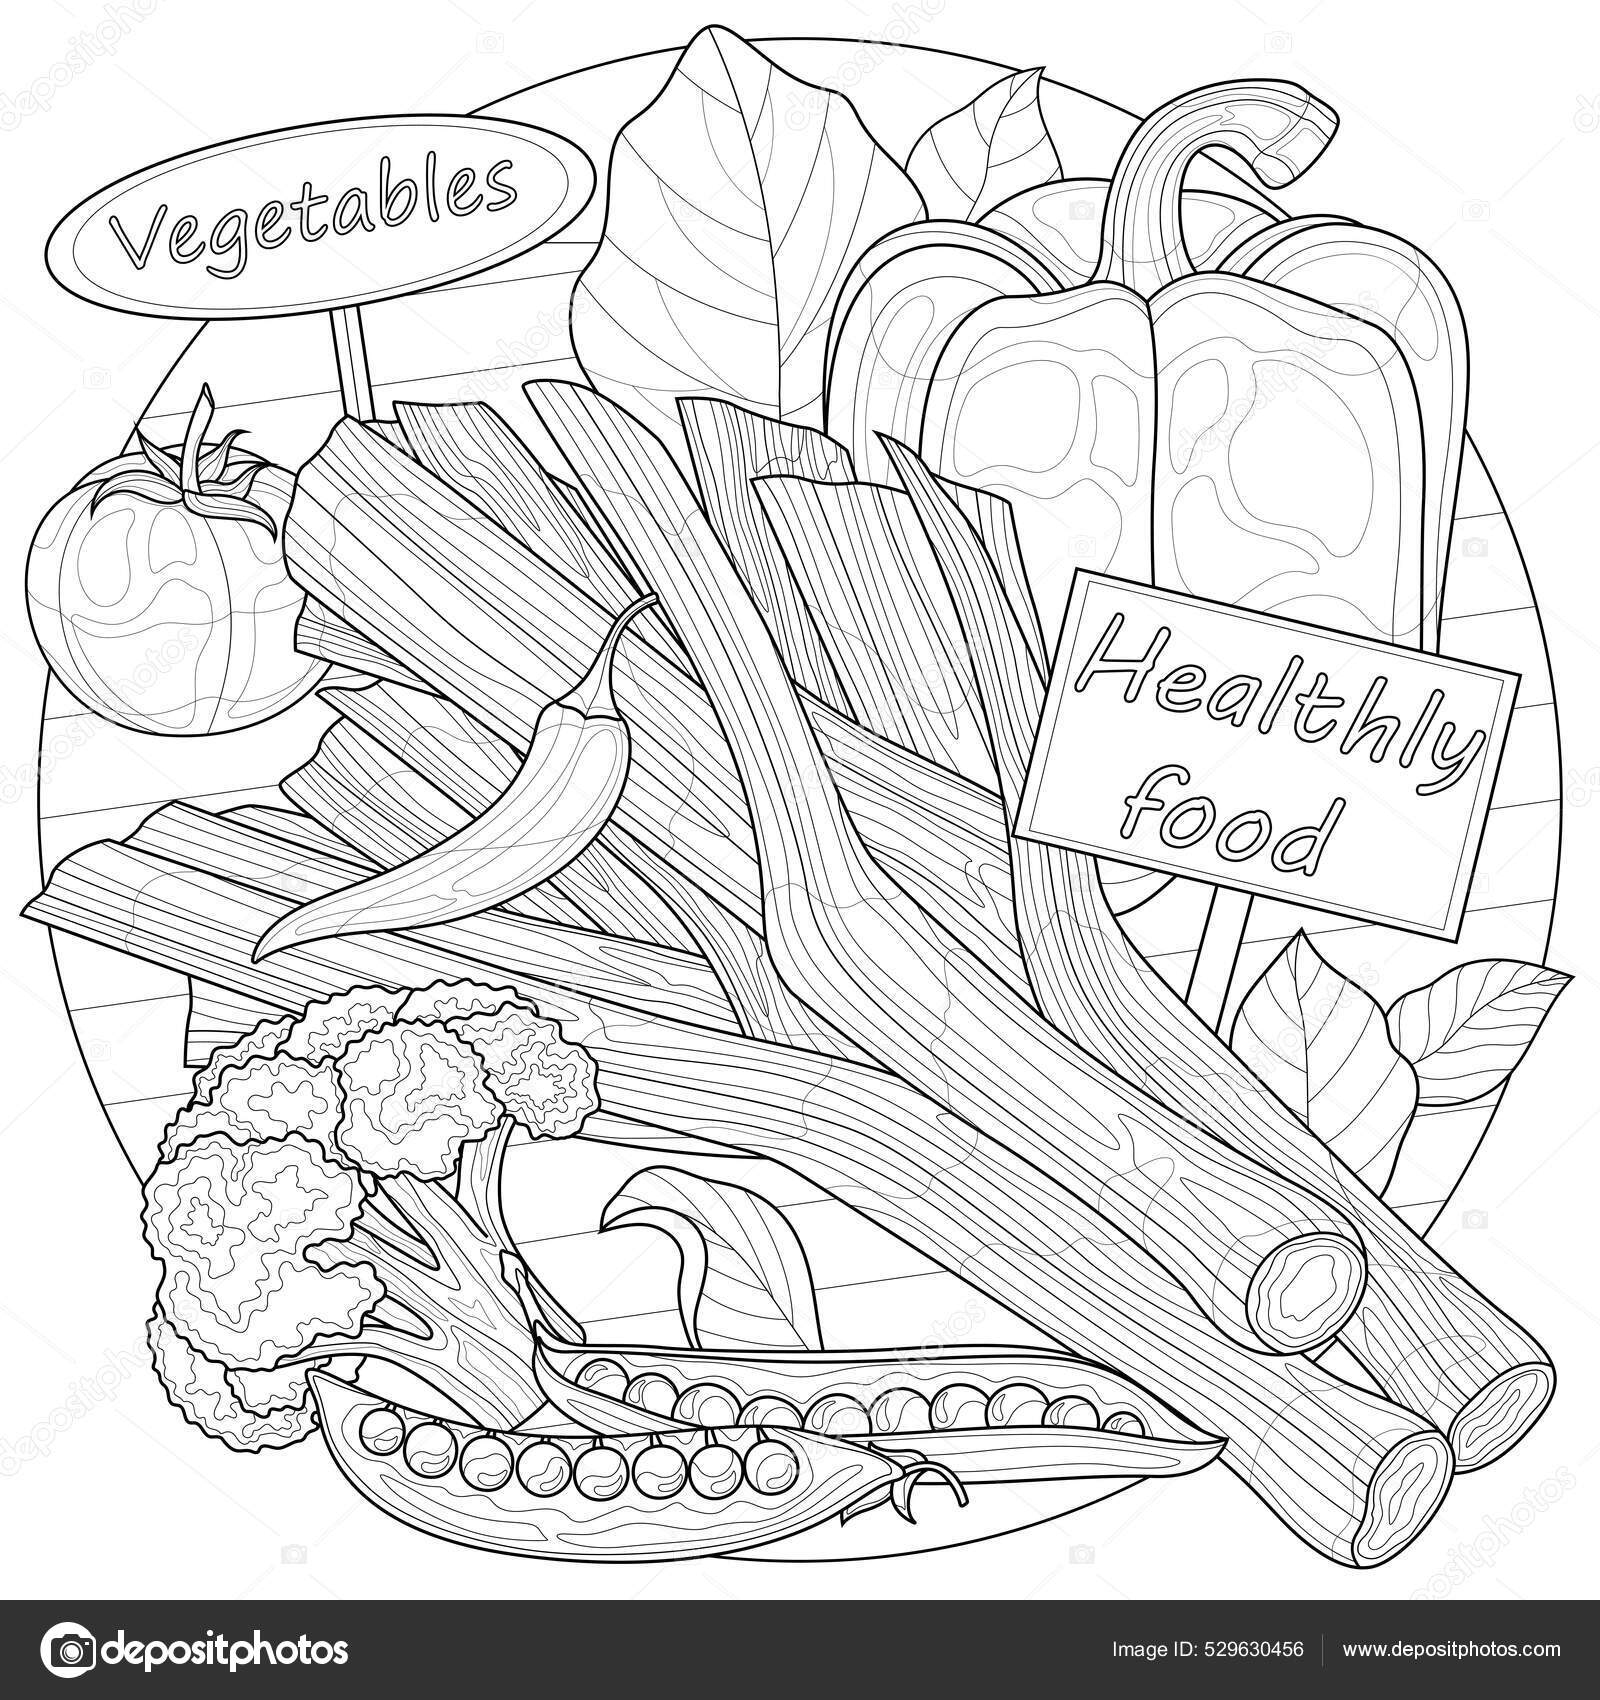 Vegetables leeks peppers peas coloring book antistress children adults zen stock vector by vlasenkoekaterinkagmail